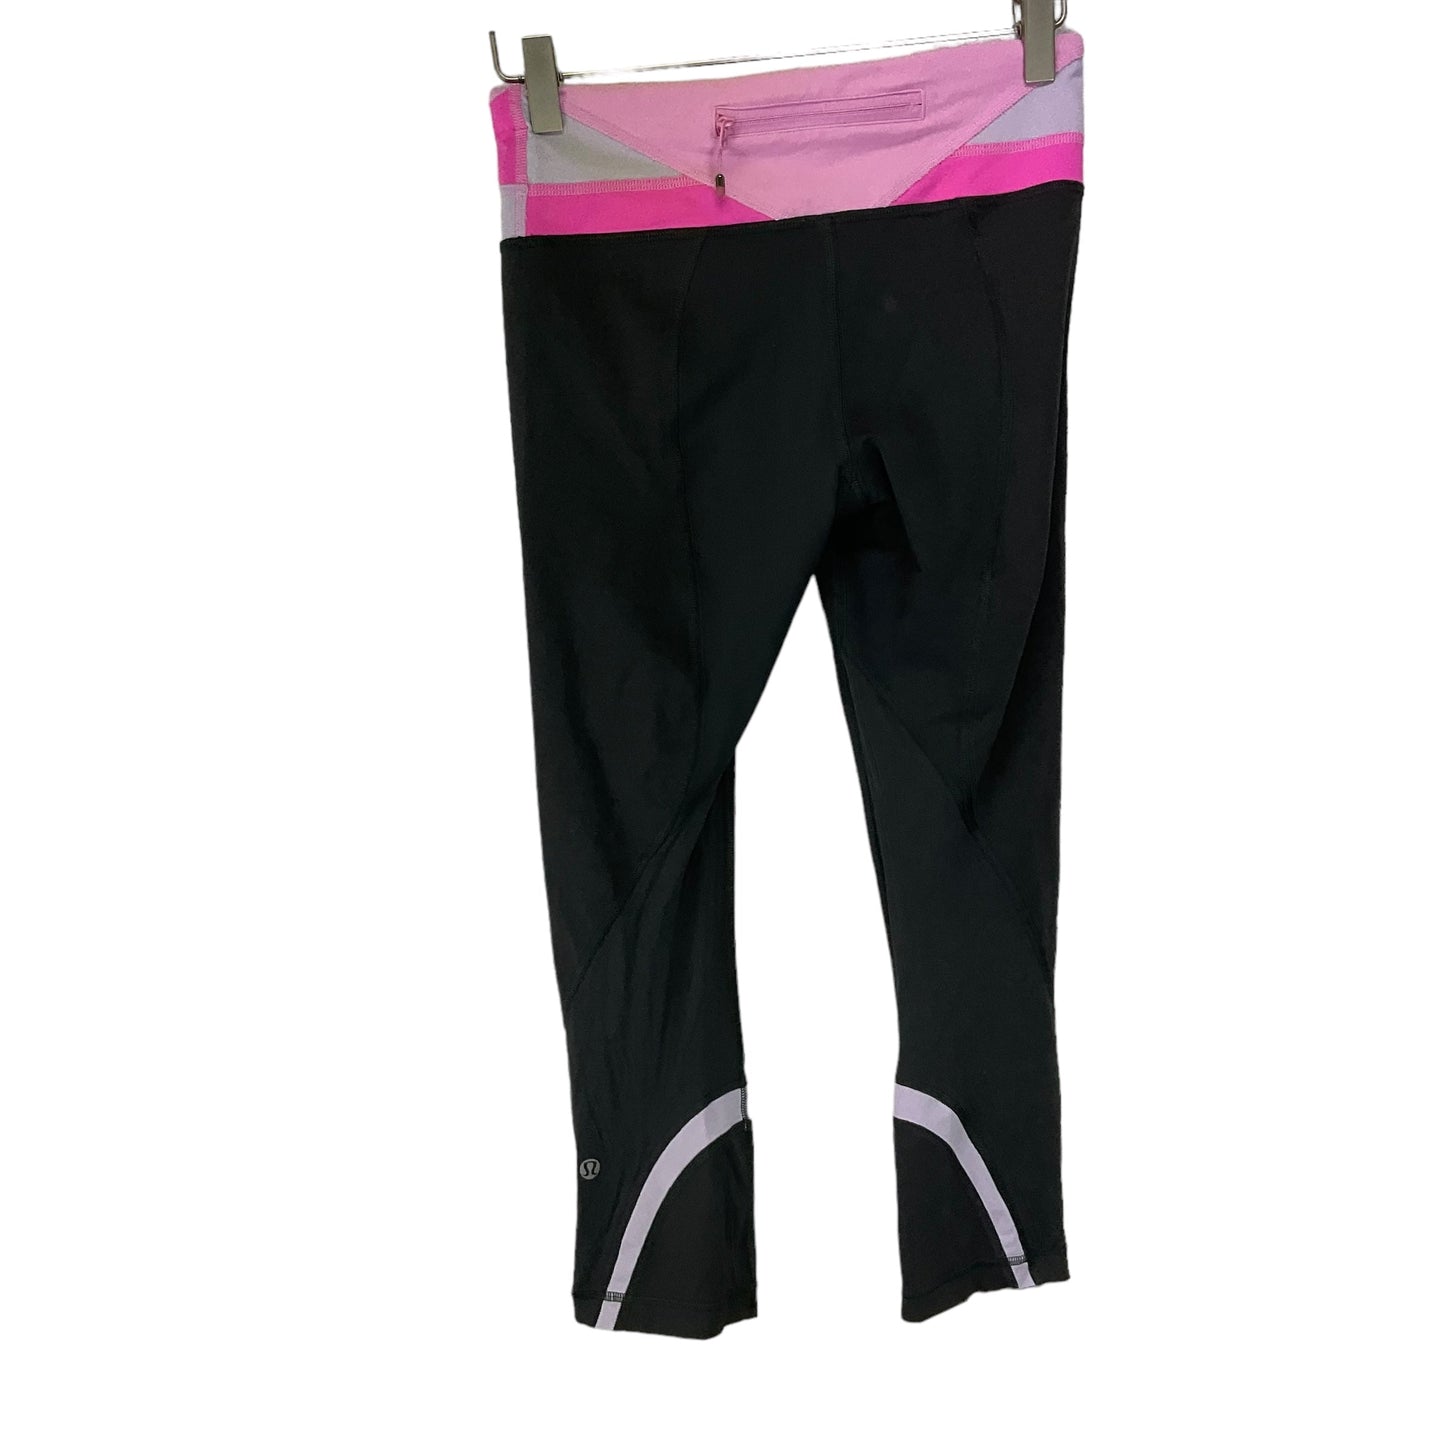 Black & Pink Athletic Leggings Lululemon, Size 4